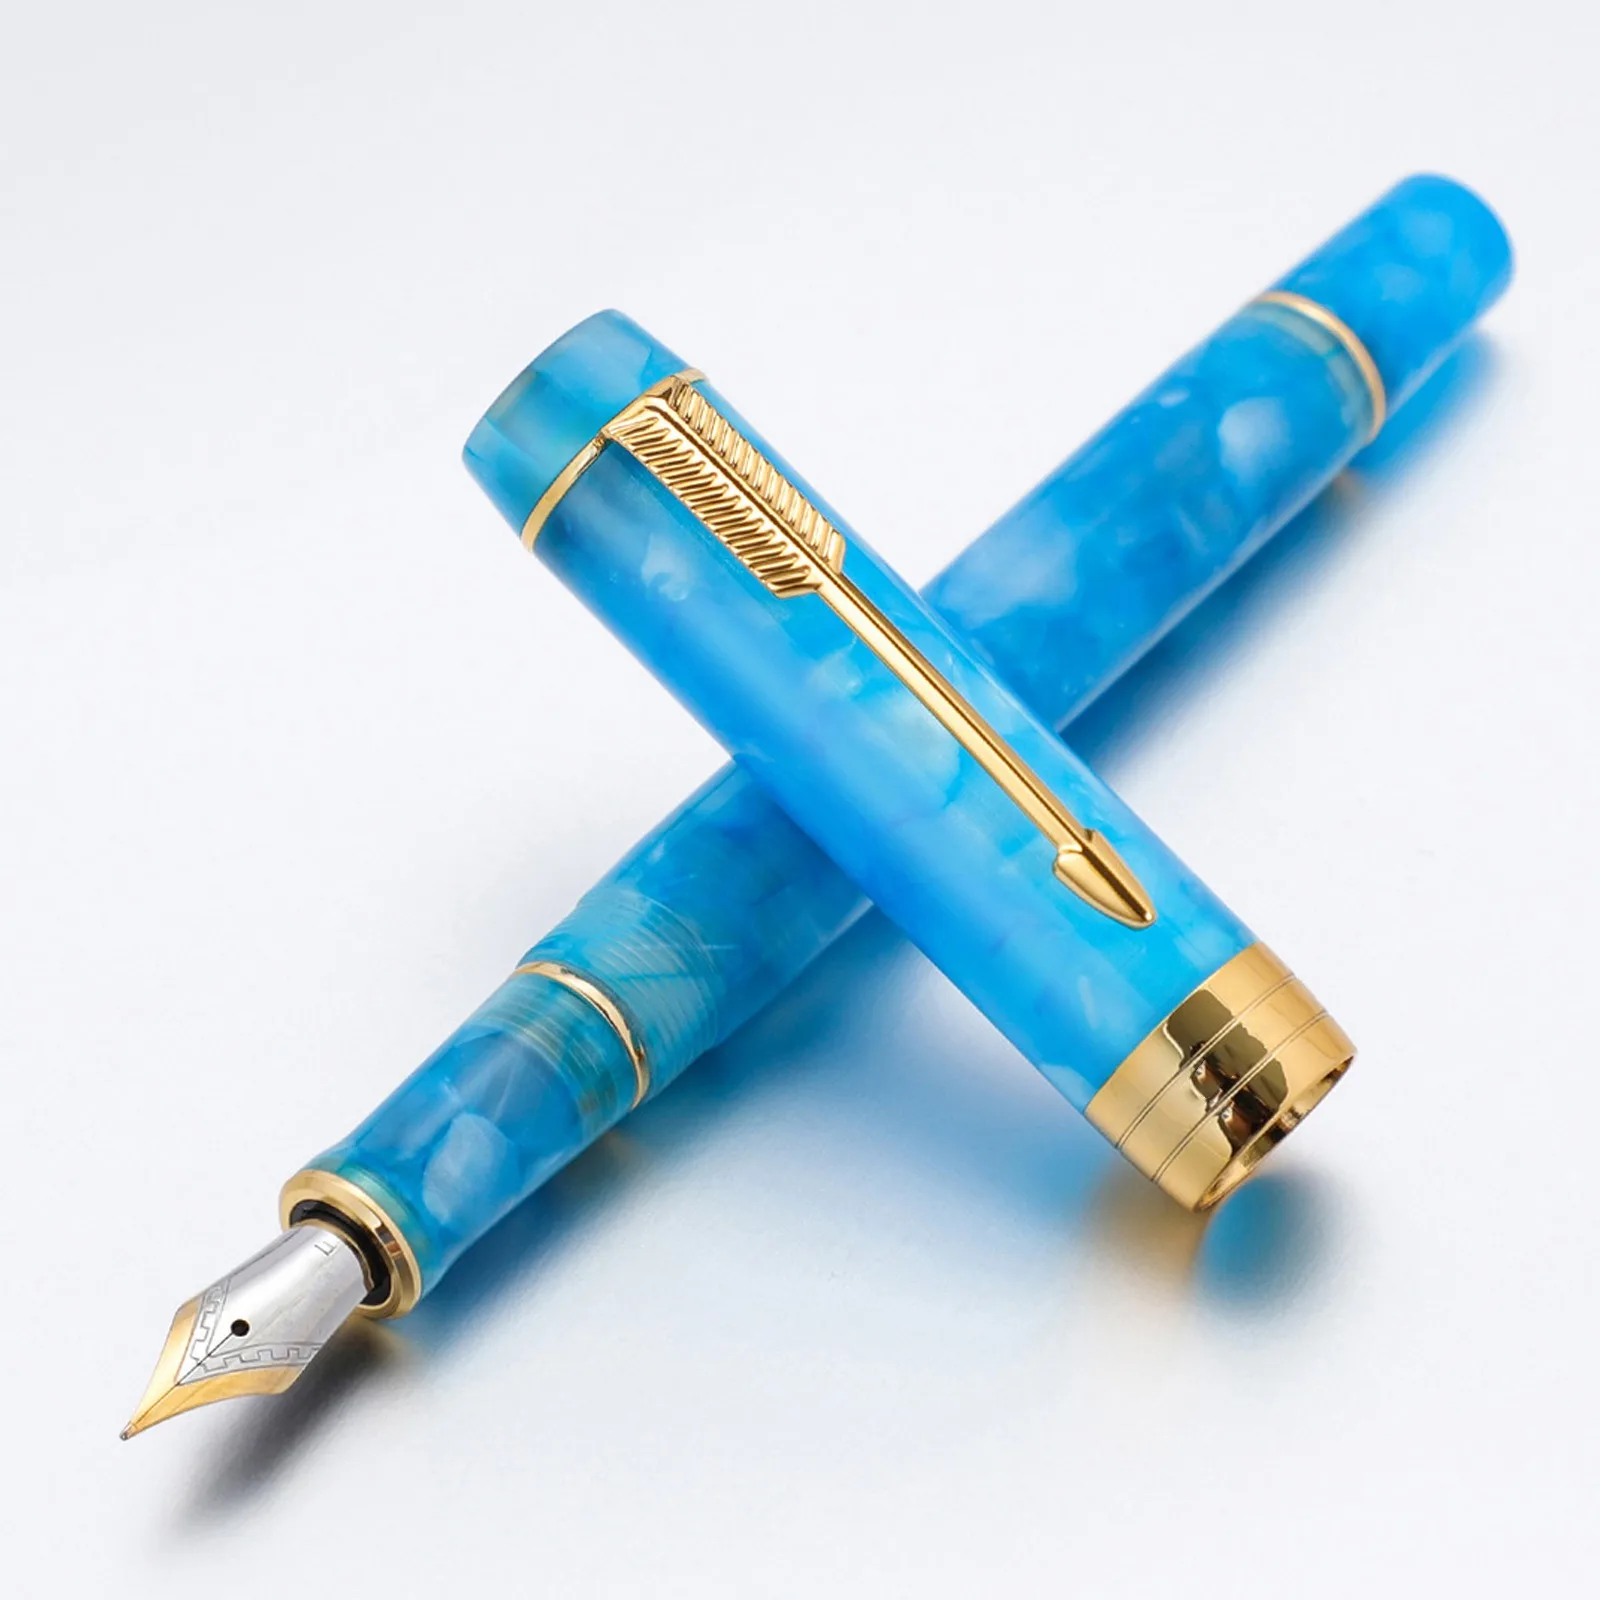 Jinhao 100 הקטן יובל שרף עט נובע F החוד עט דיו עם ממיר הספר כתיבה עסקית מתנות עטים - 5